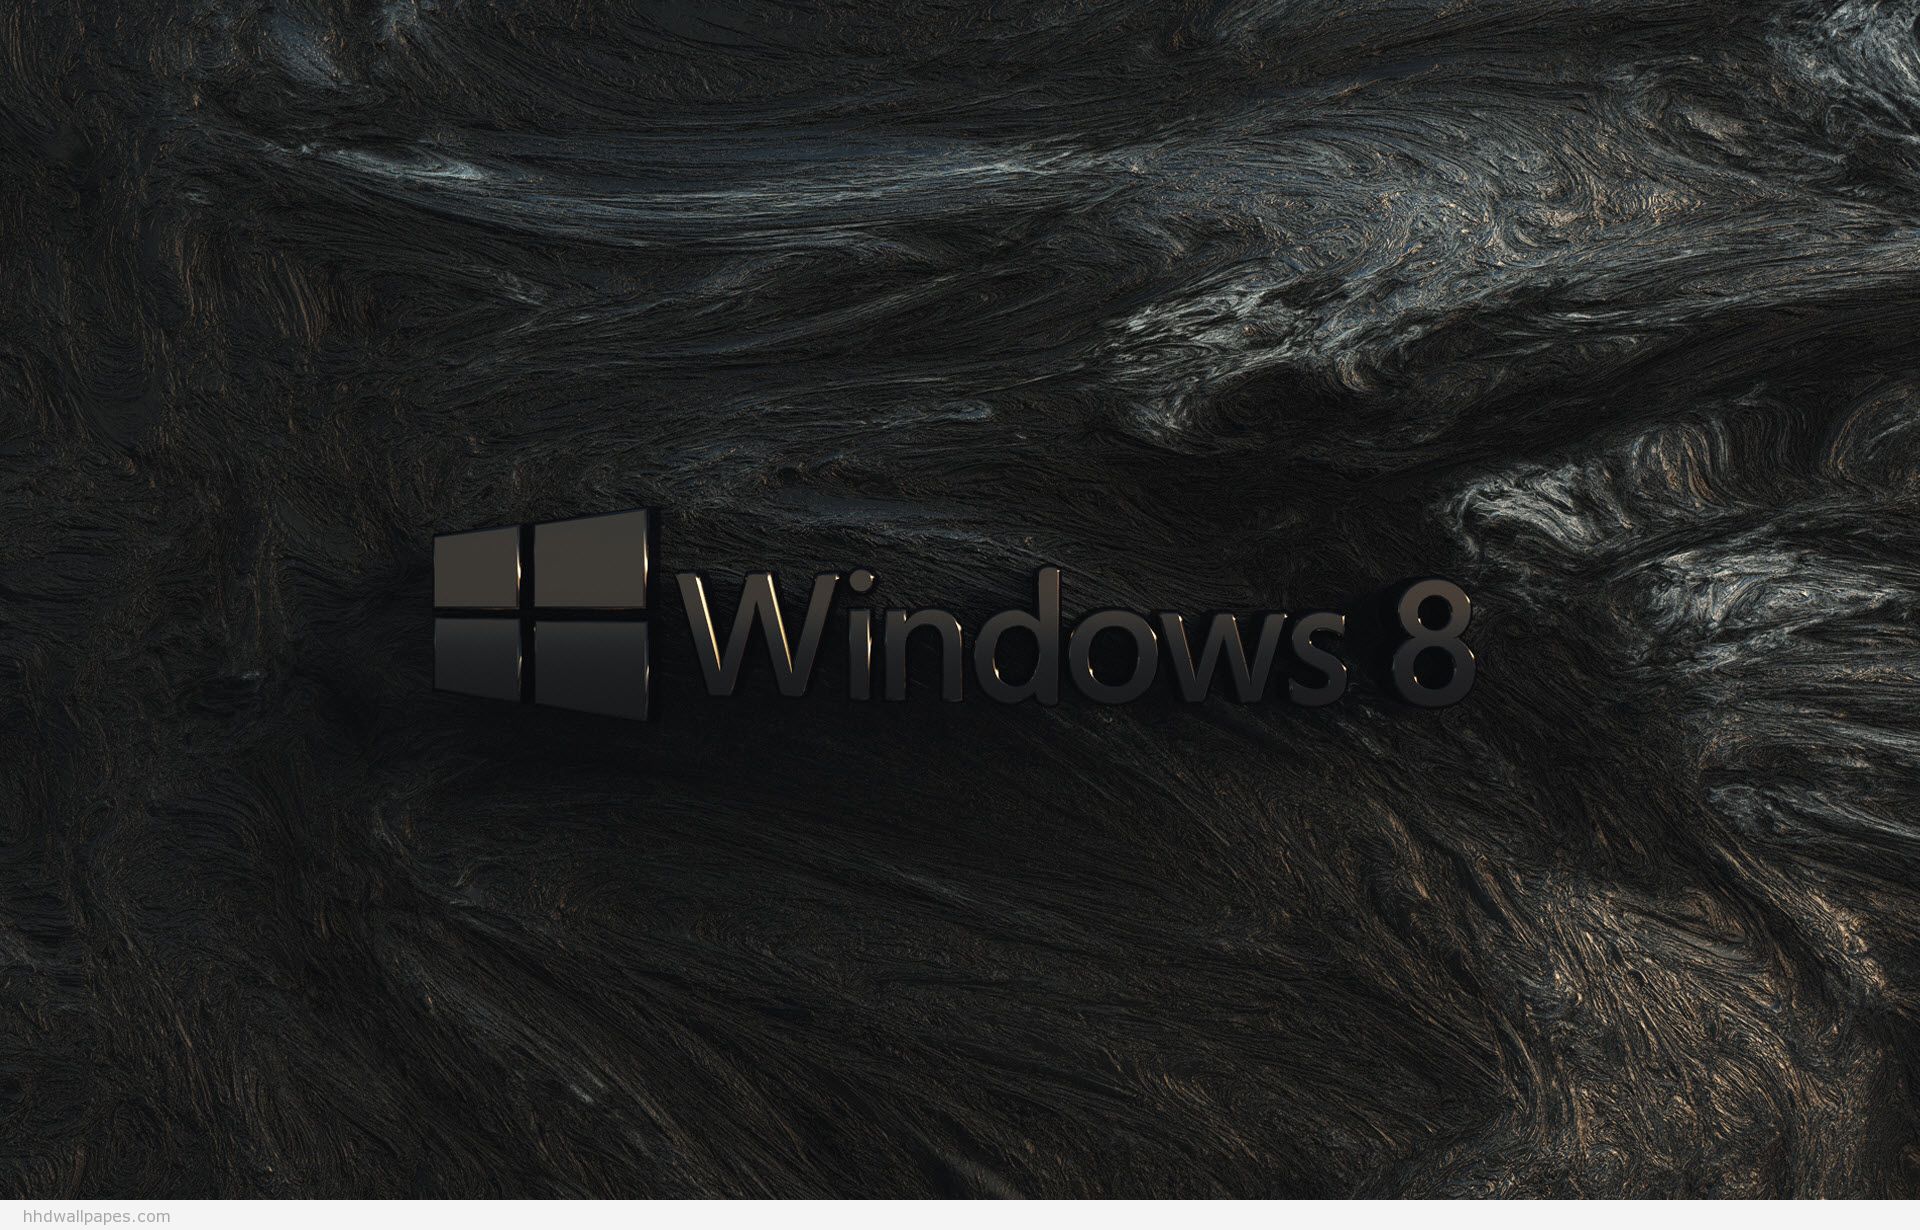 Windows 8 Desktop Wallpaper Hd 19201230 132797 HD Wallpaper Res